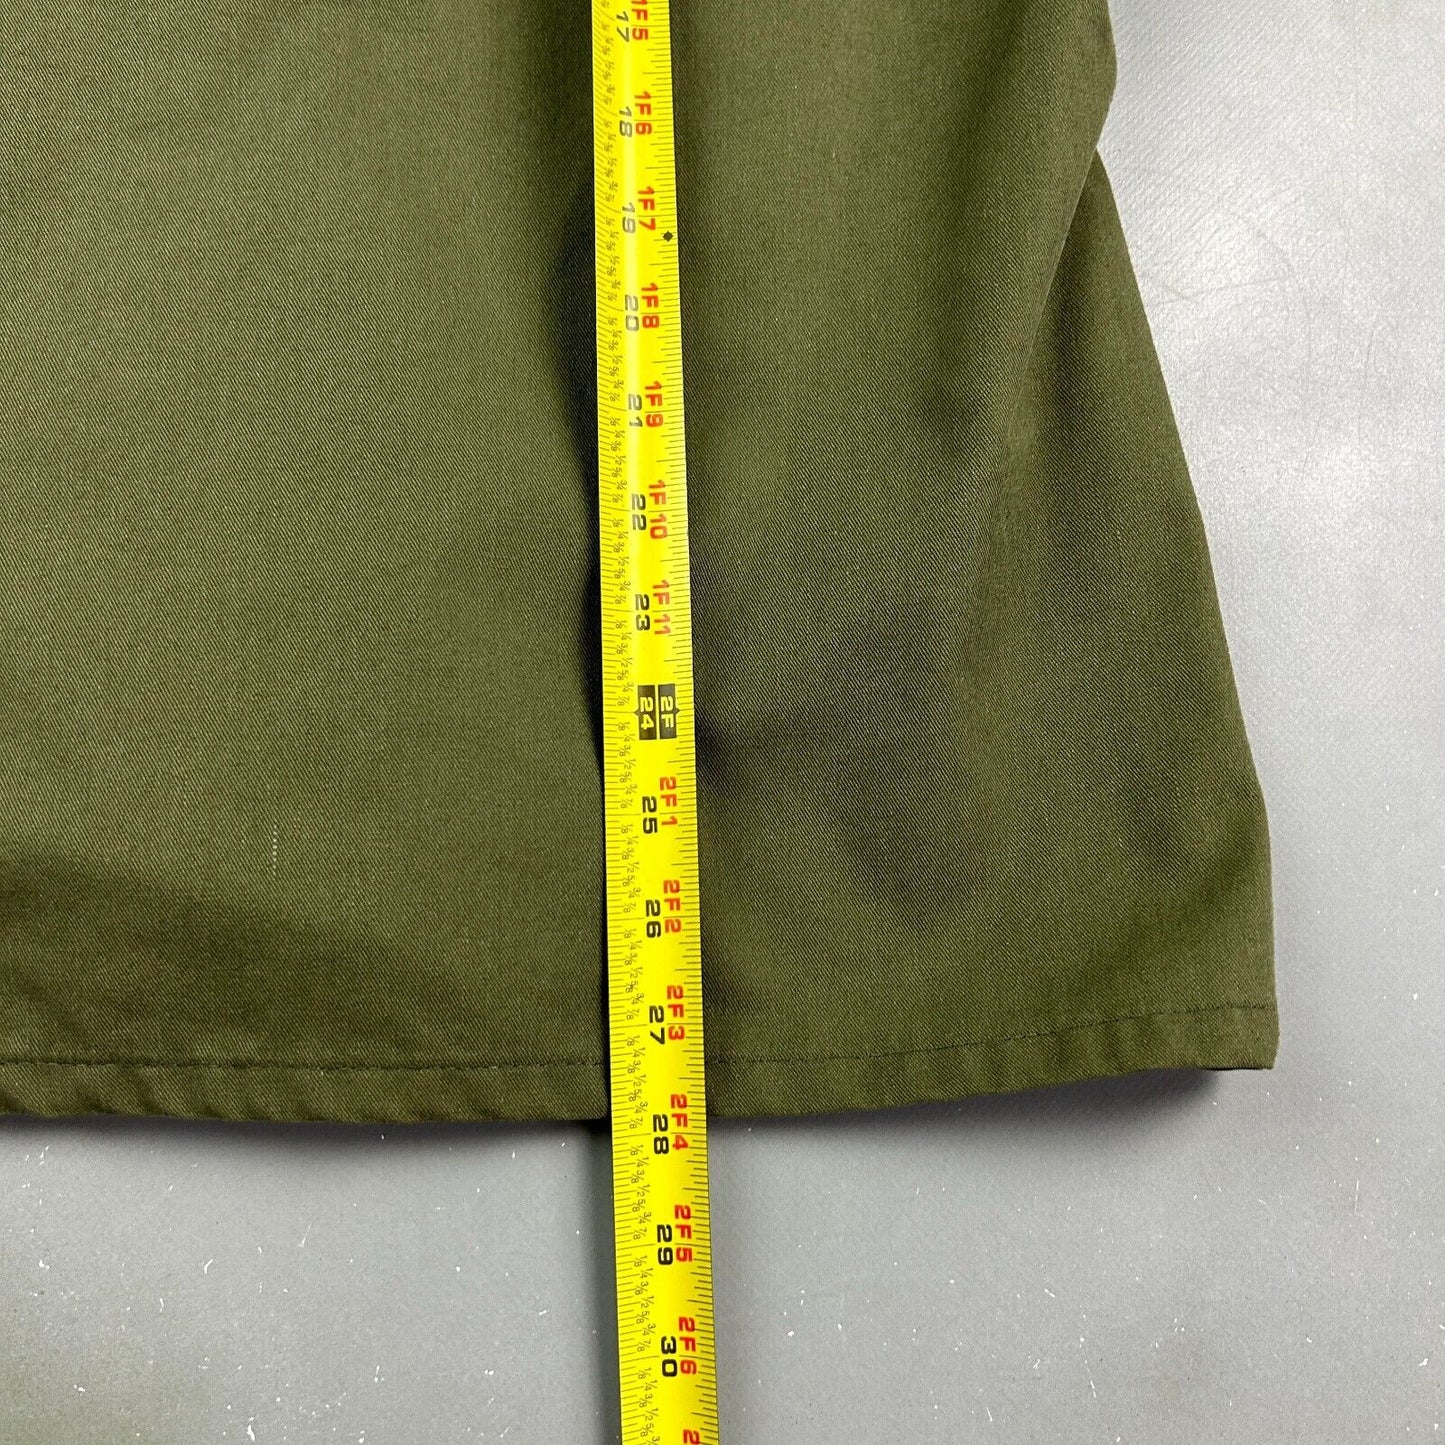 VINTAGE | U.S Air Force Green Fatigue OG 507 Button Down Shirt sz M Adult